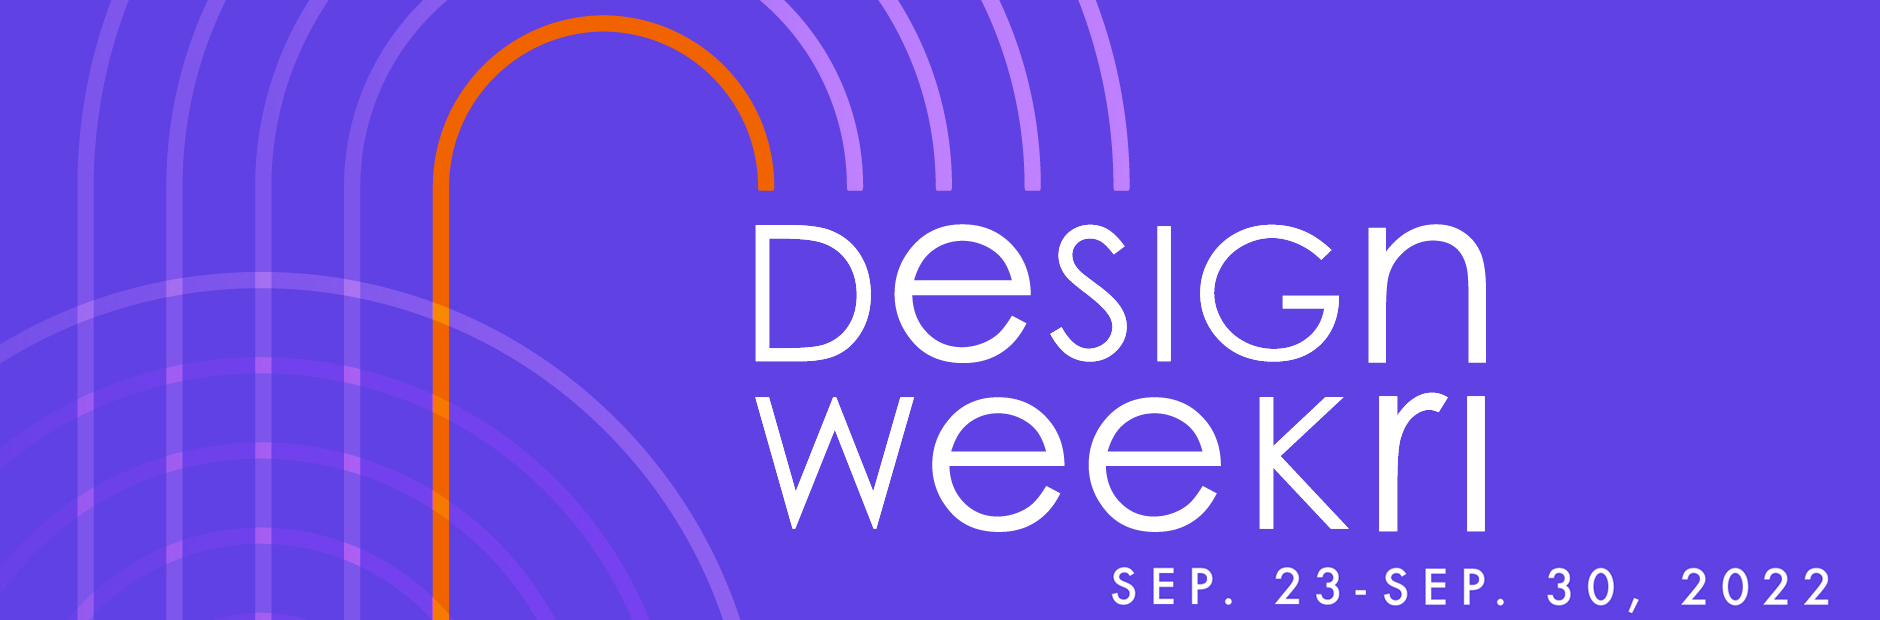 DESIGN WEEK RI: September 24 - October 1, 2021 | Live + Virtual